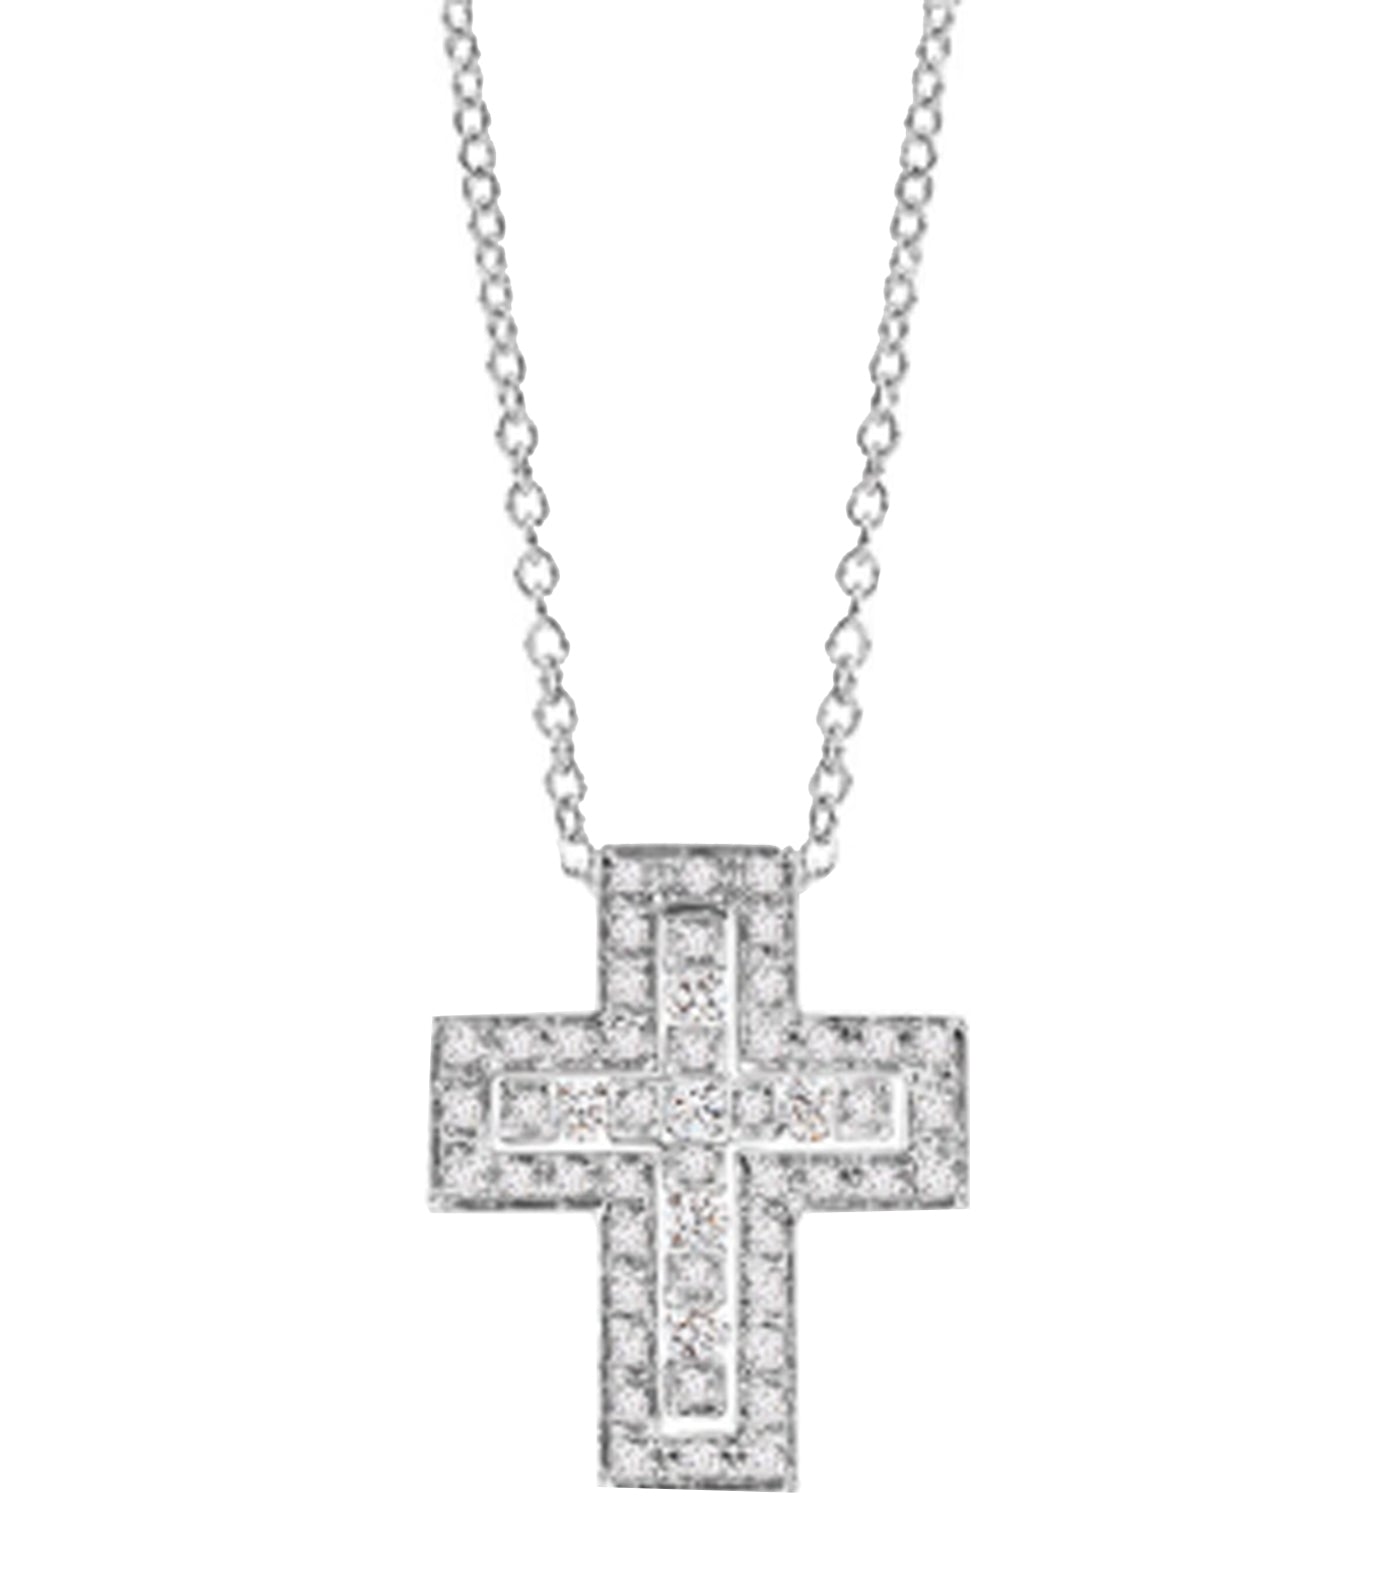 Belle Epoque 18K White Gold and Diamonds Cross Necklace 50cm